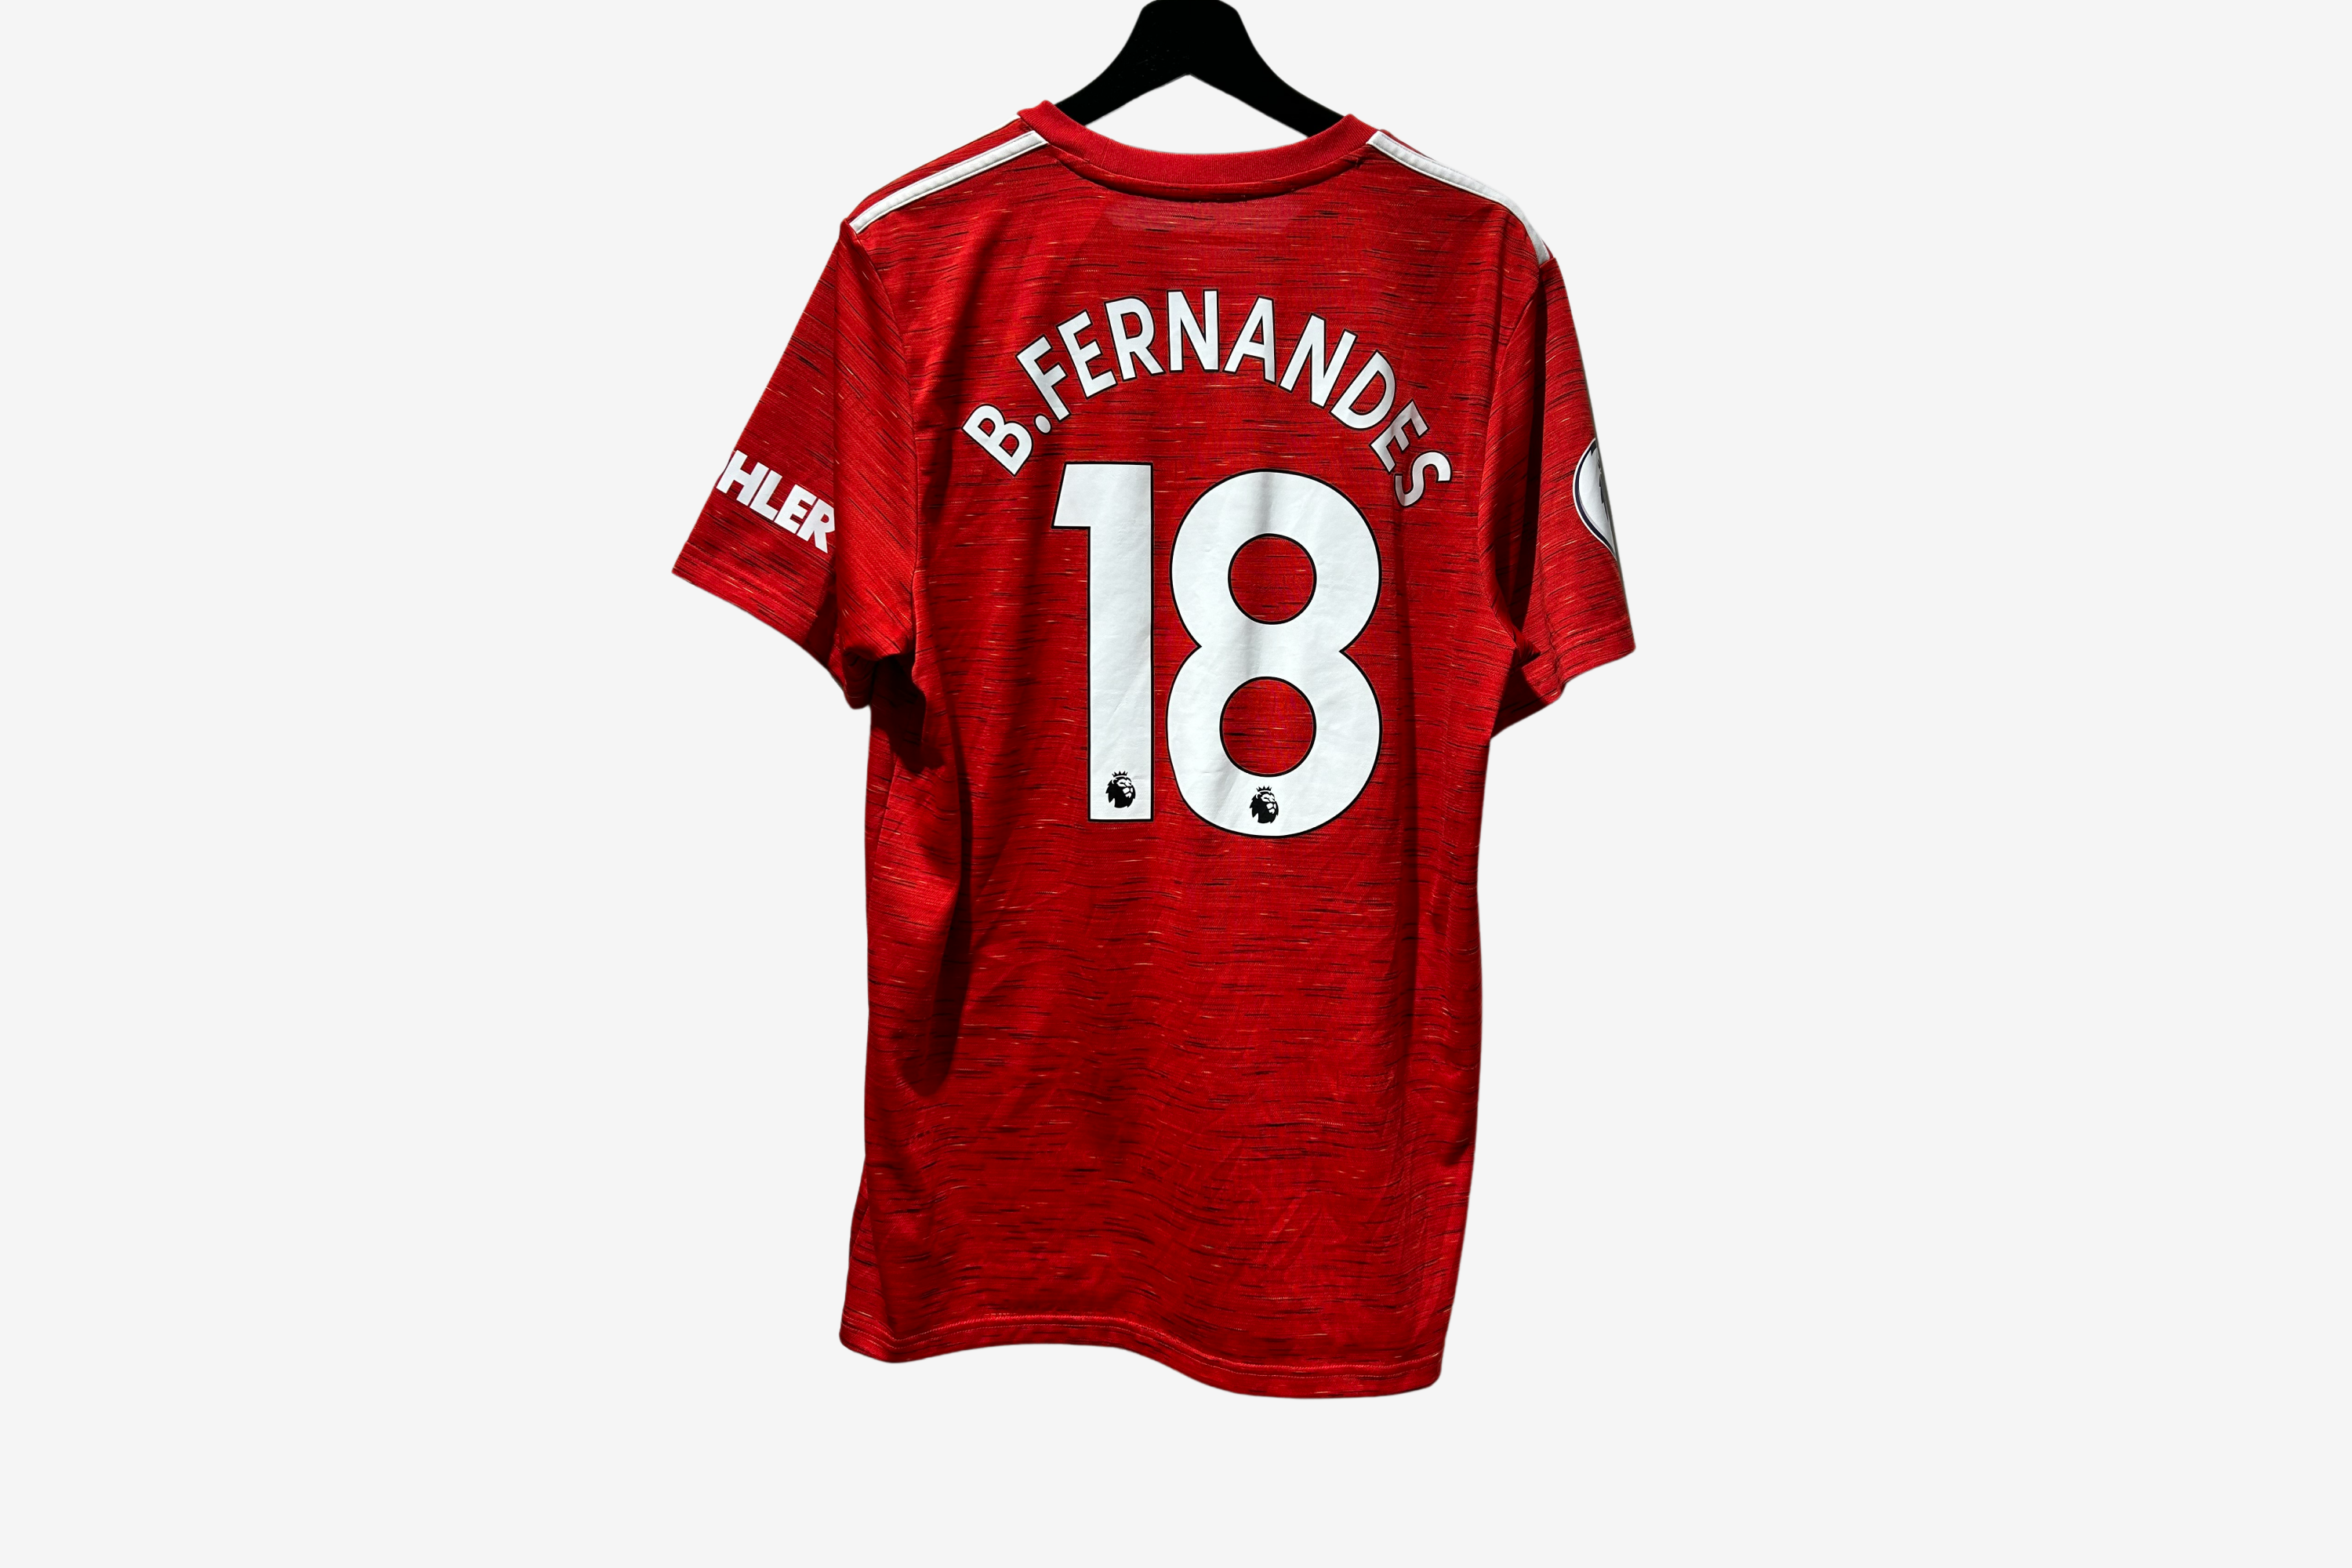 Adidas - Manchester United 2020/21 Home Football Shirt 'B.FERNANDES'